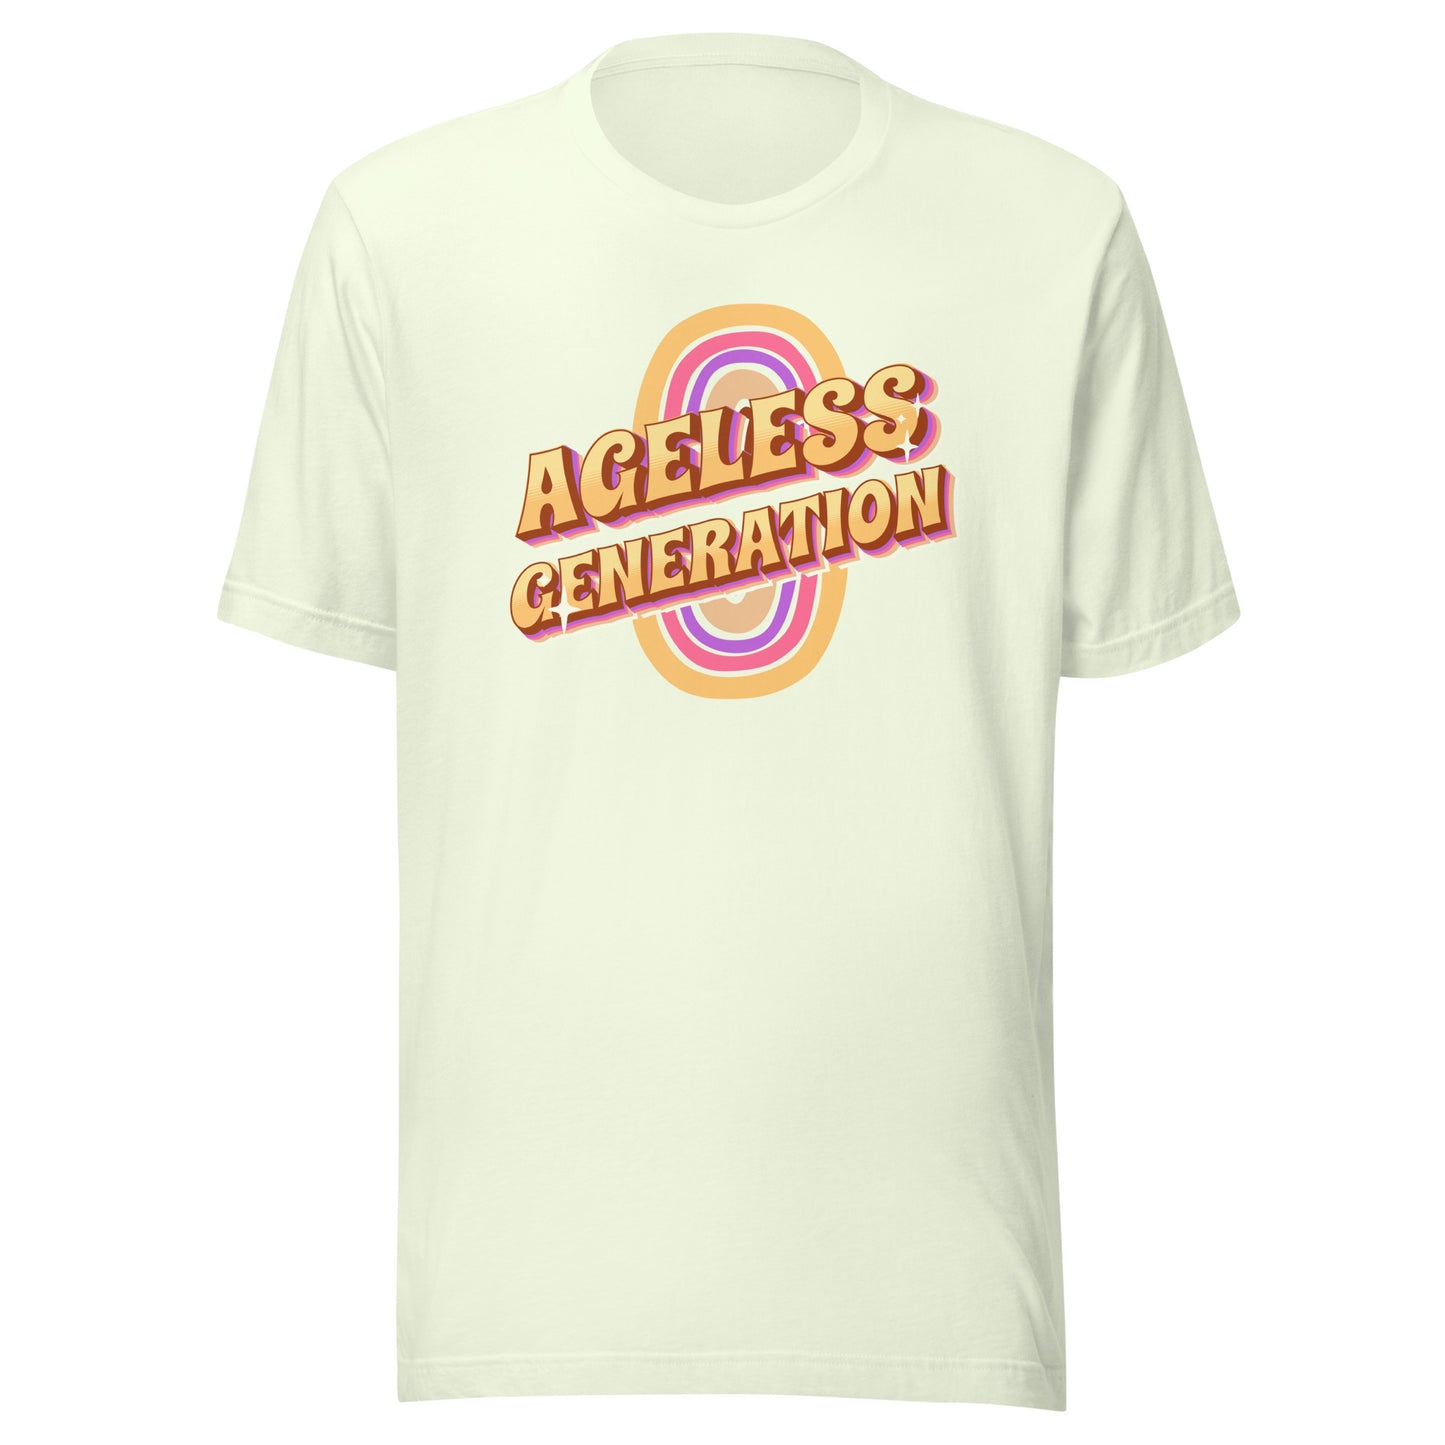 Ageless Generation Retro Unisex t-shirt